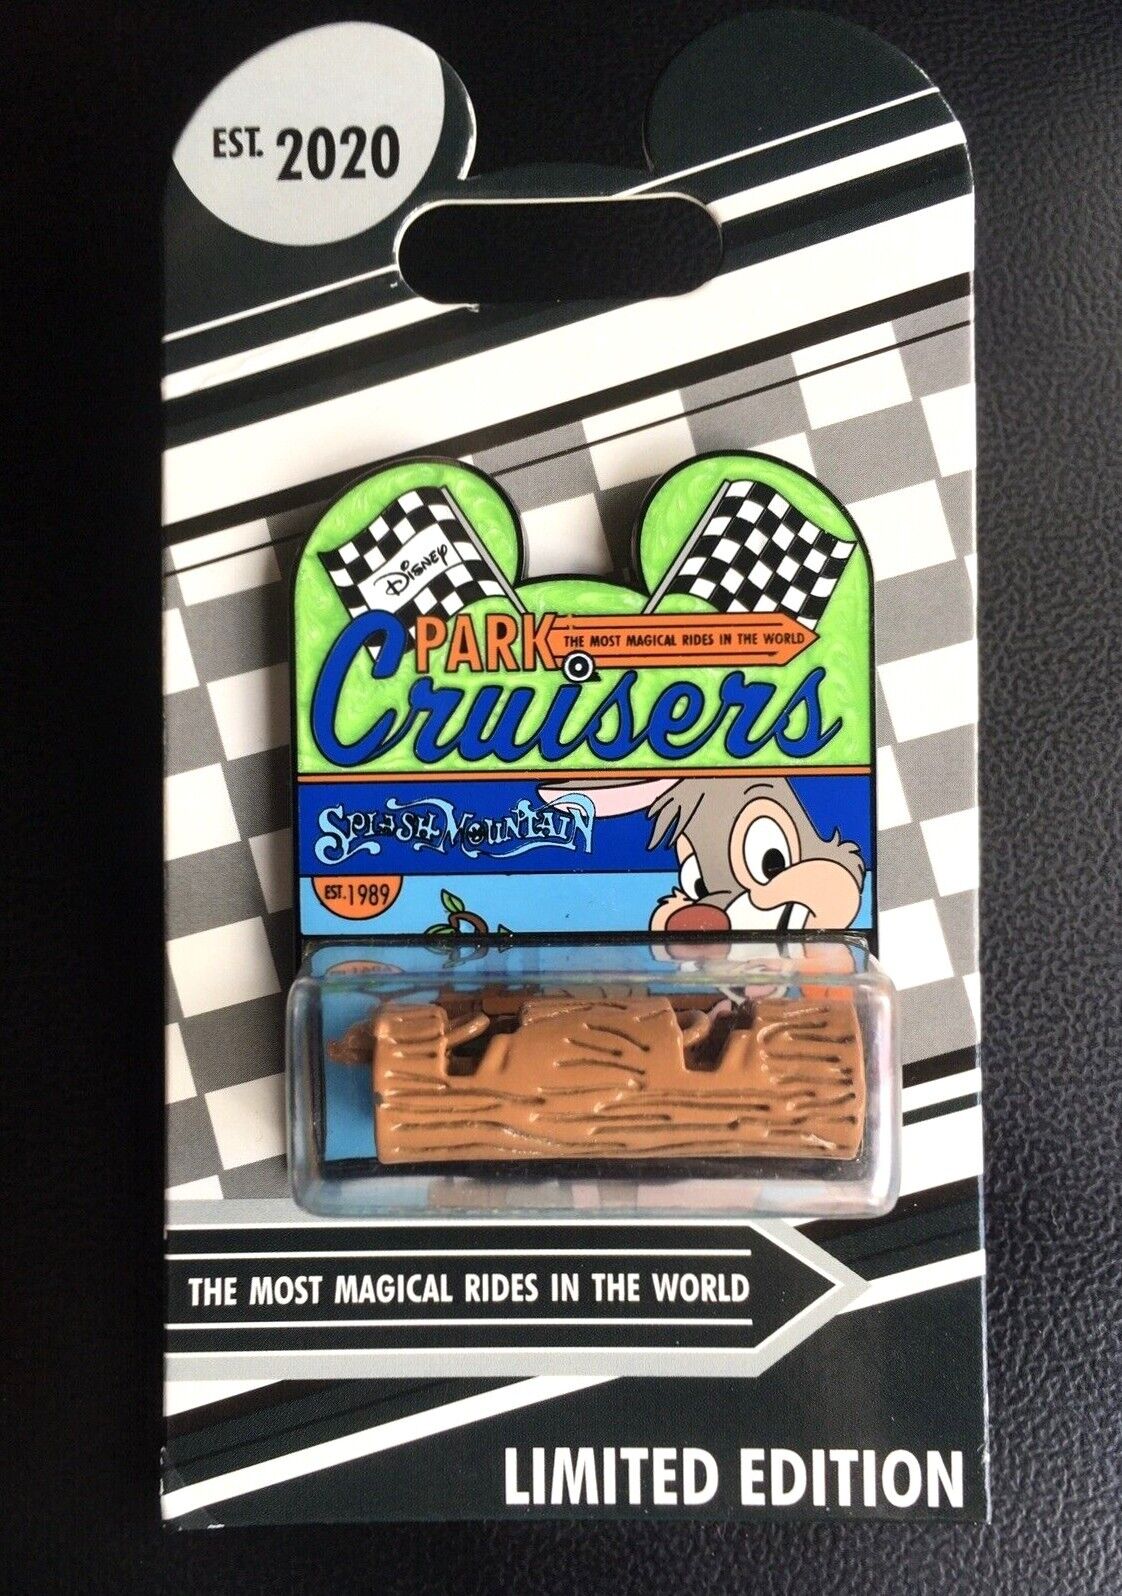 NEW Splash Mountain Disney Park Cruisers Pin Rare Brer Rabbit LLE 2000